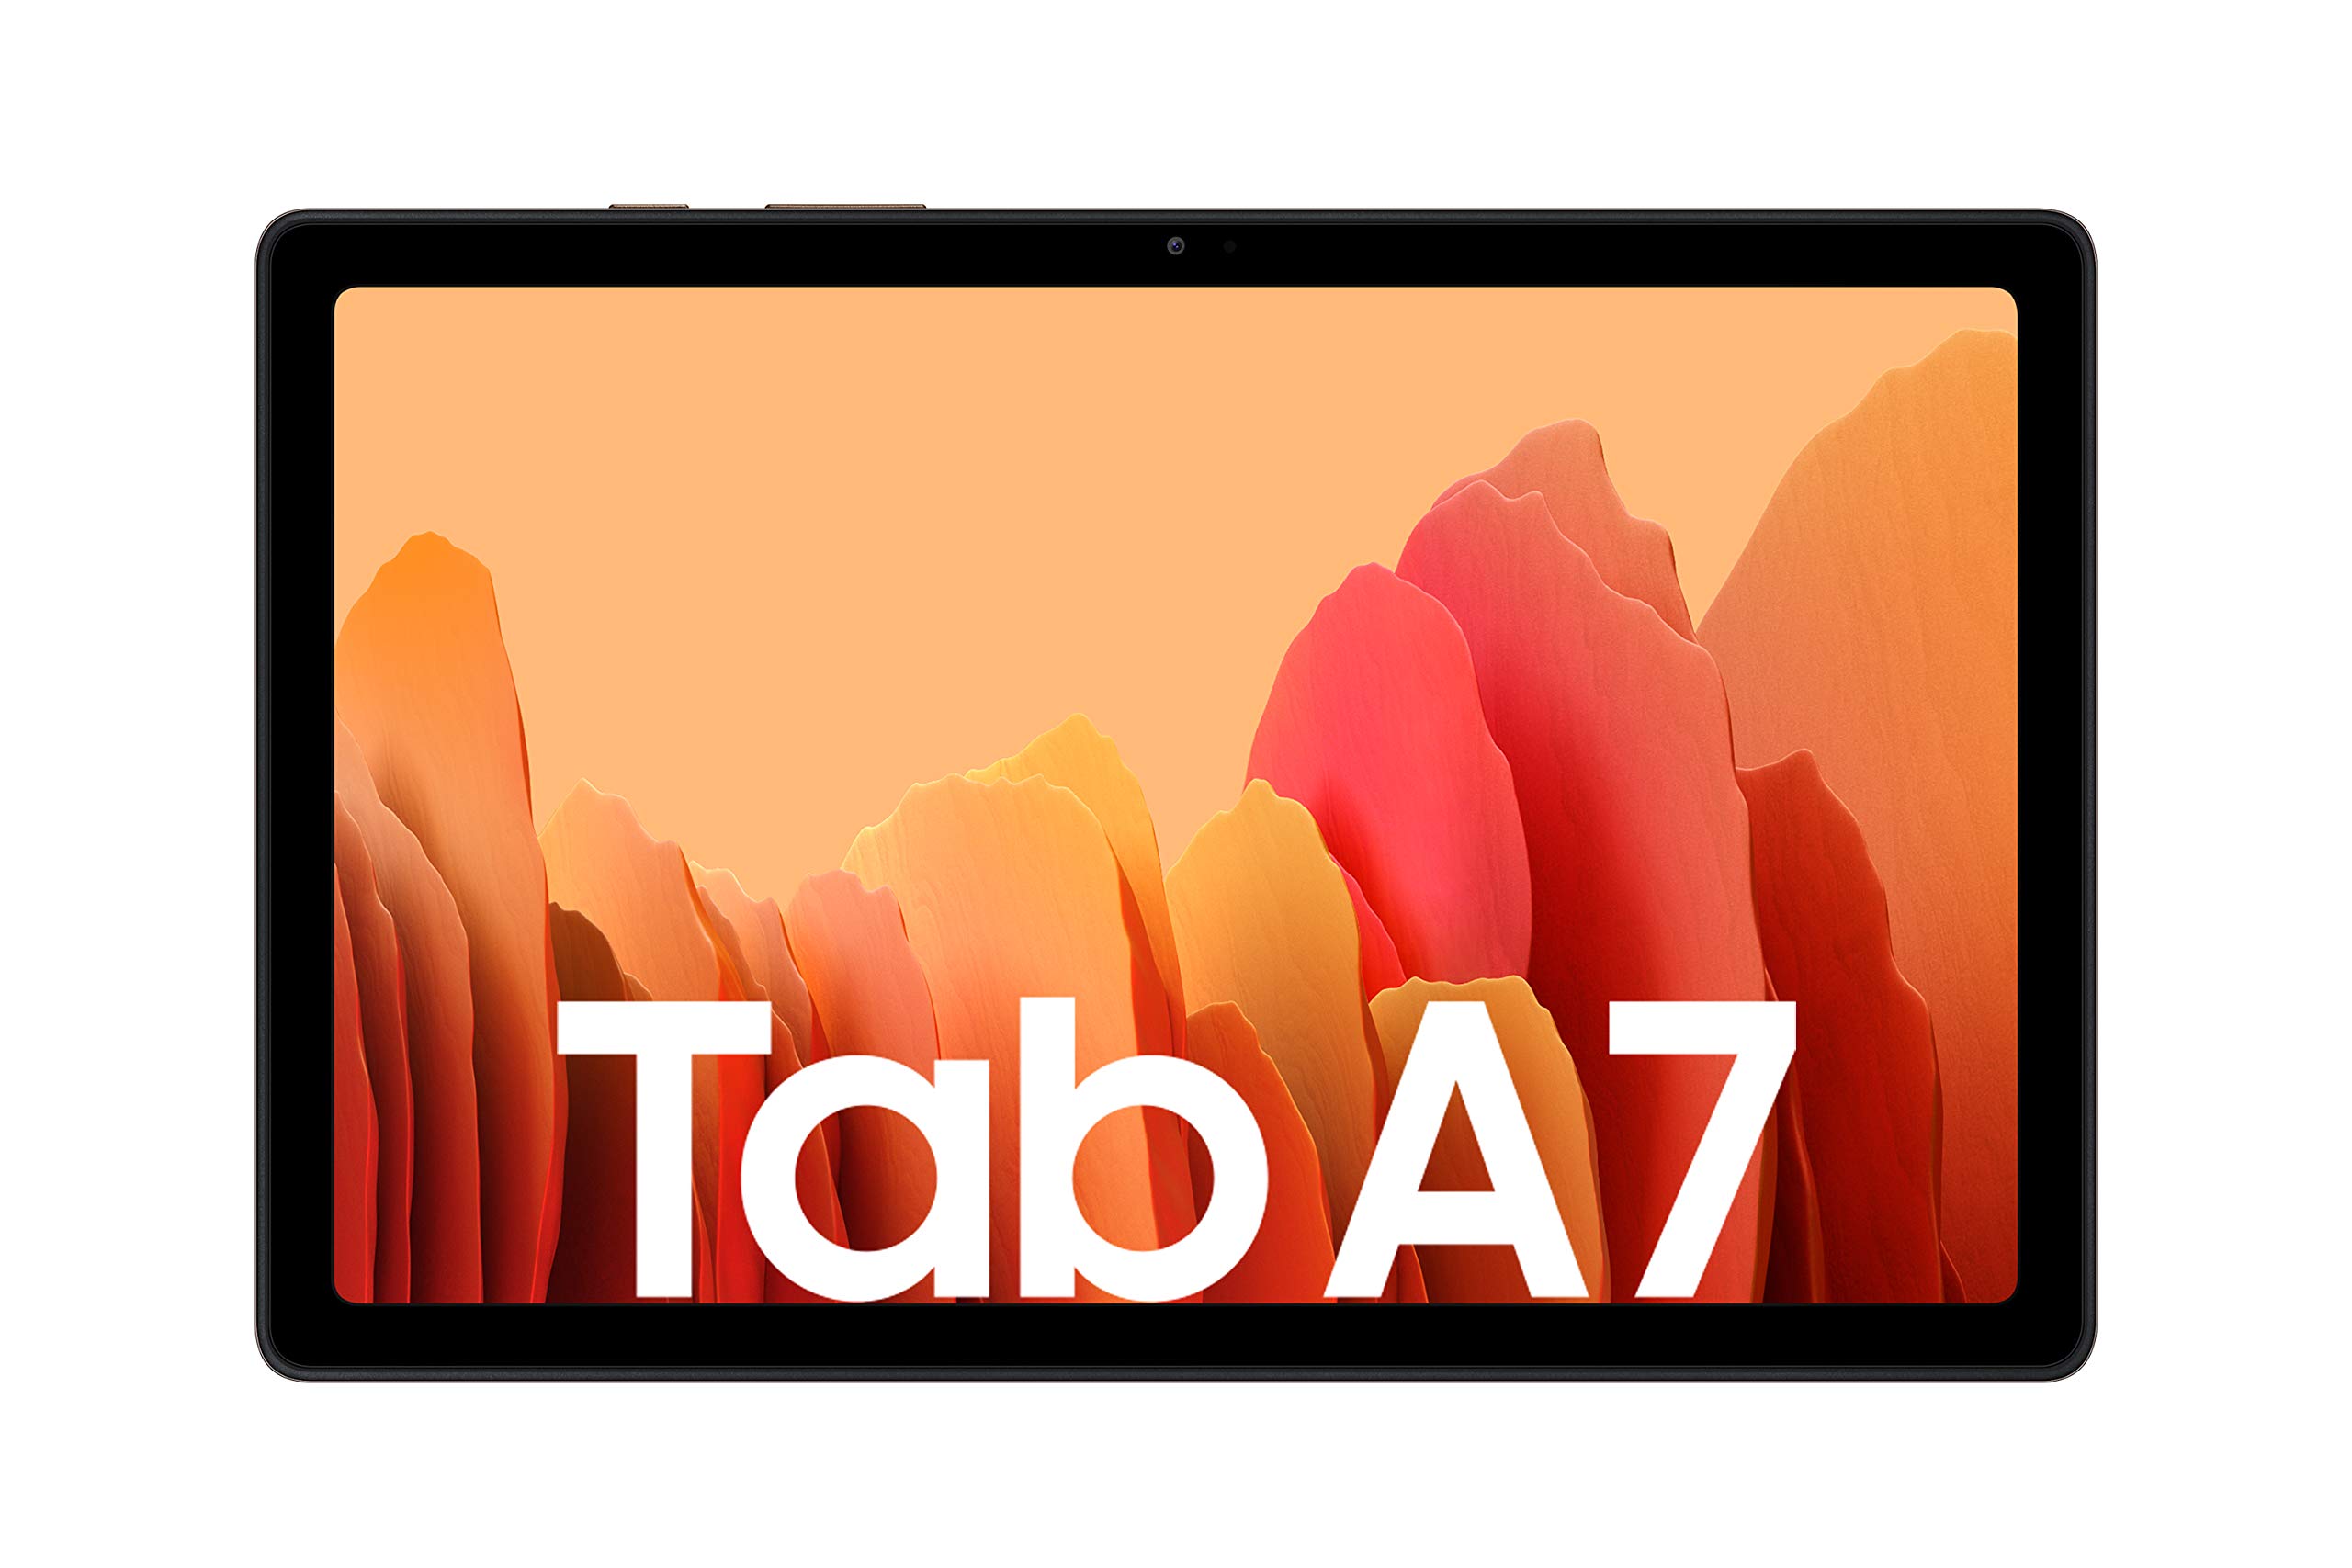 Samsung Galaxy Tab A7, Android Tablet, LTE, 7.040 mAh Akku, 10,4 Zoll TFT Display, vier Lautsprecher, 32 GB/3 GB RAM, Tablet in Gold